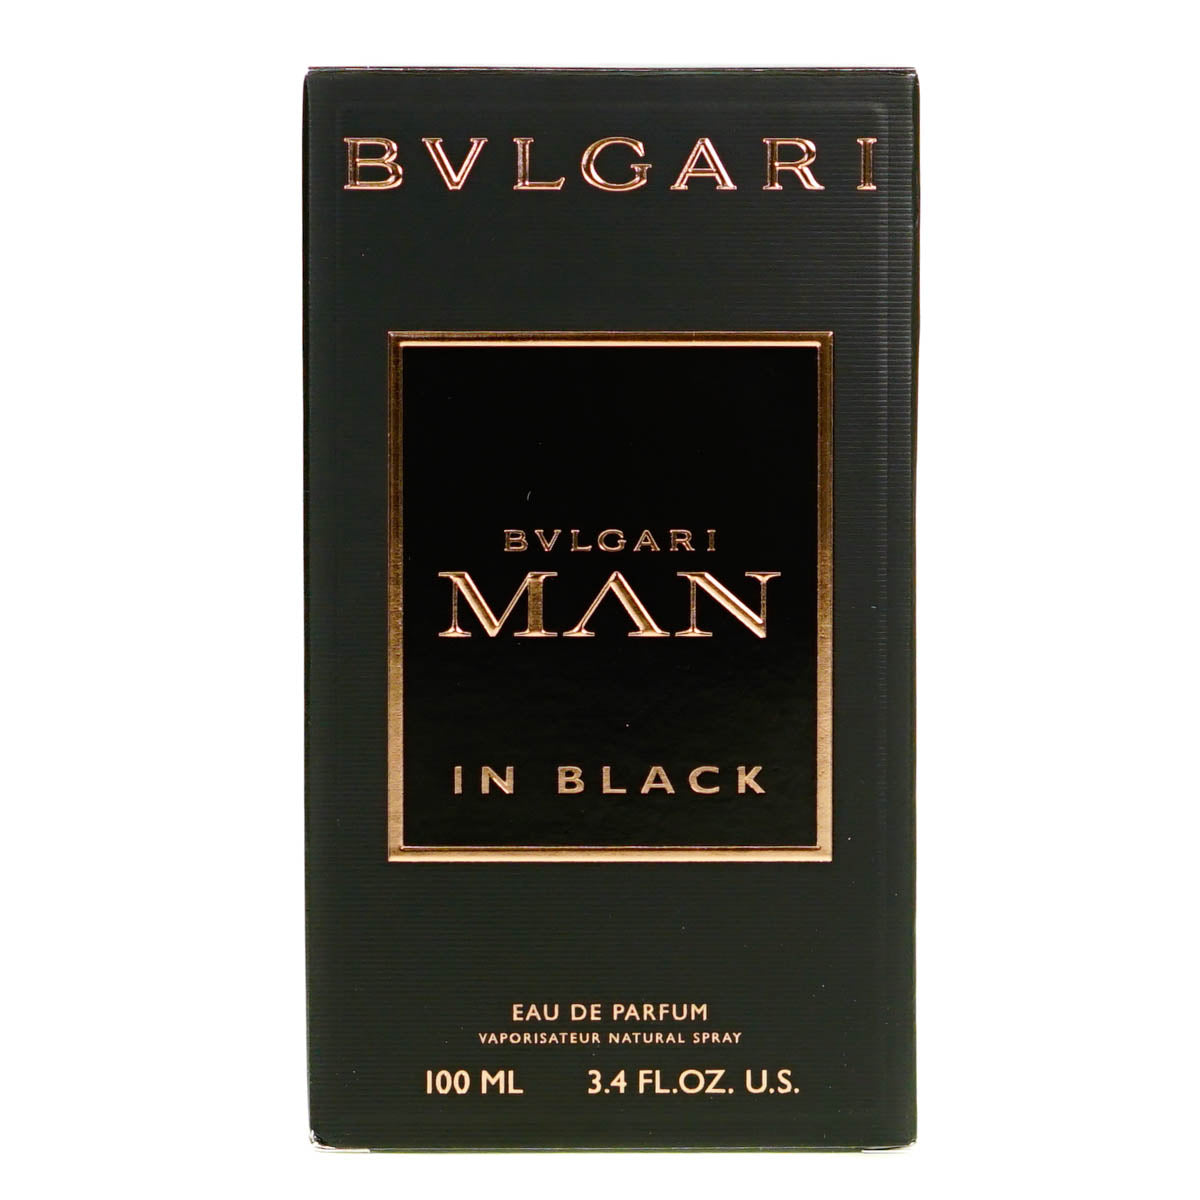 Bvlgari Man In Black 100ml Eau De Parfum